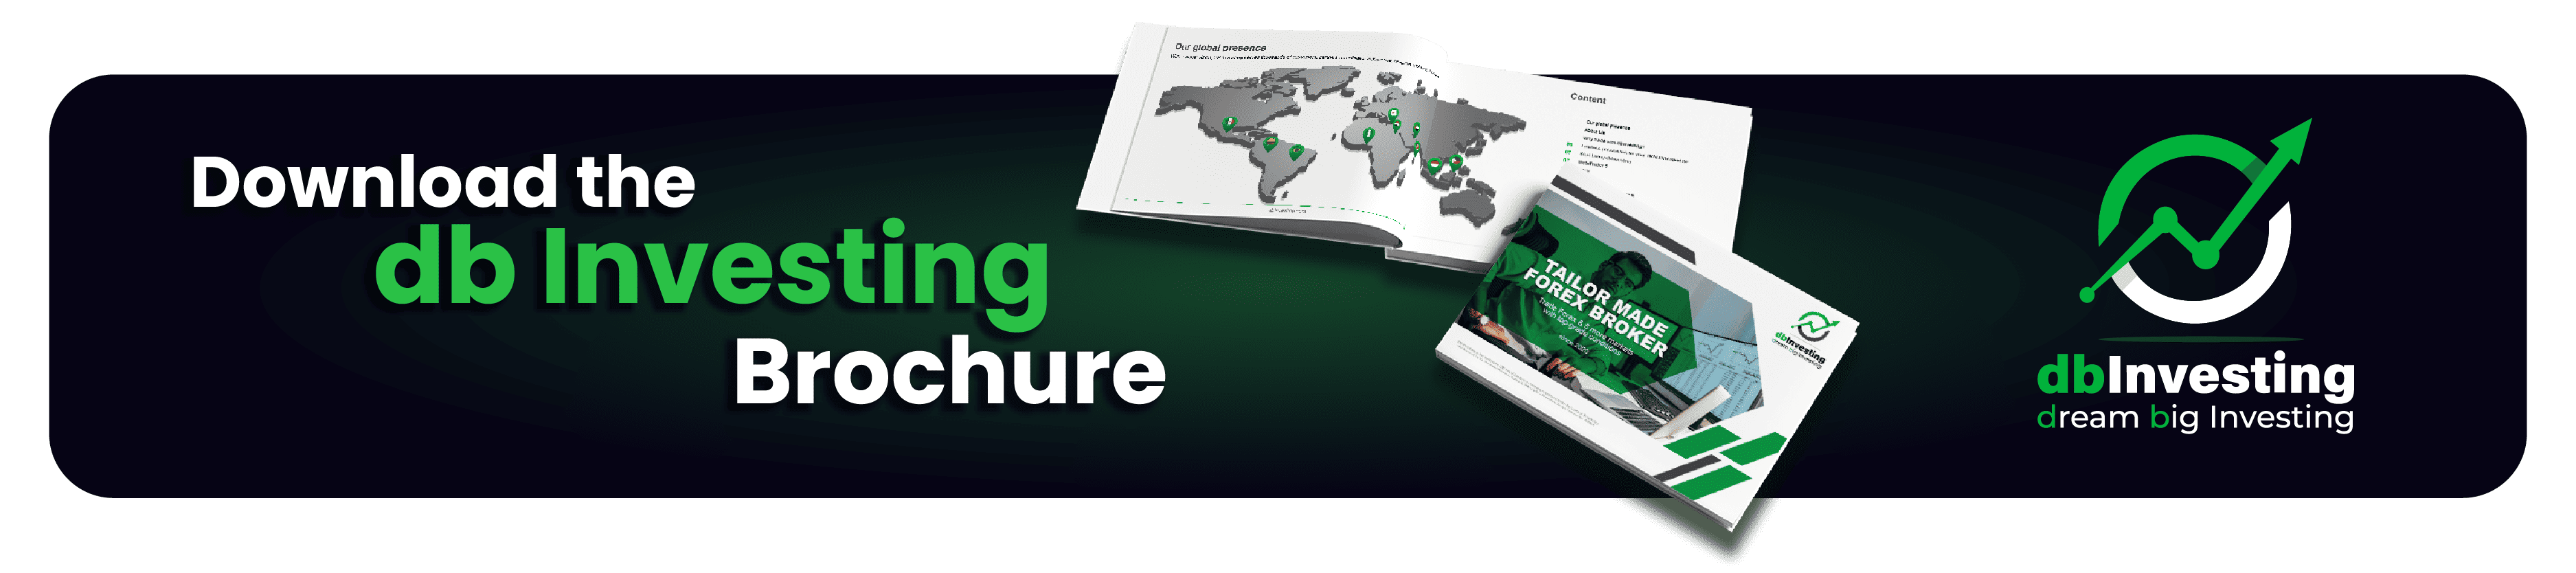 Download DB Investing Brochure banner